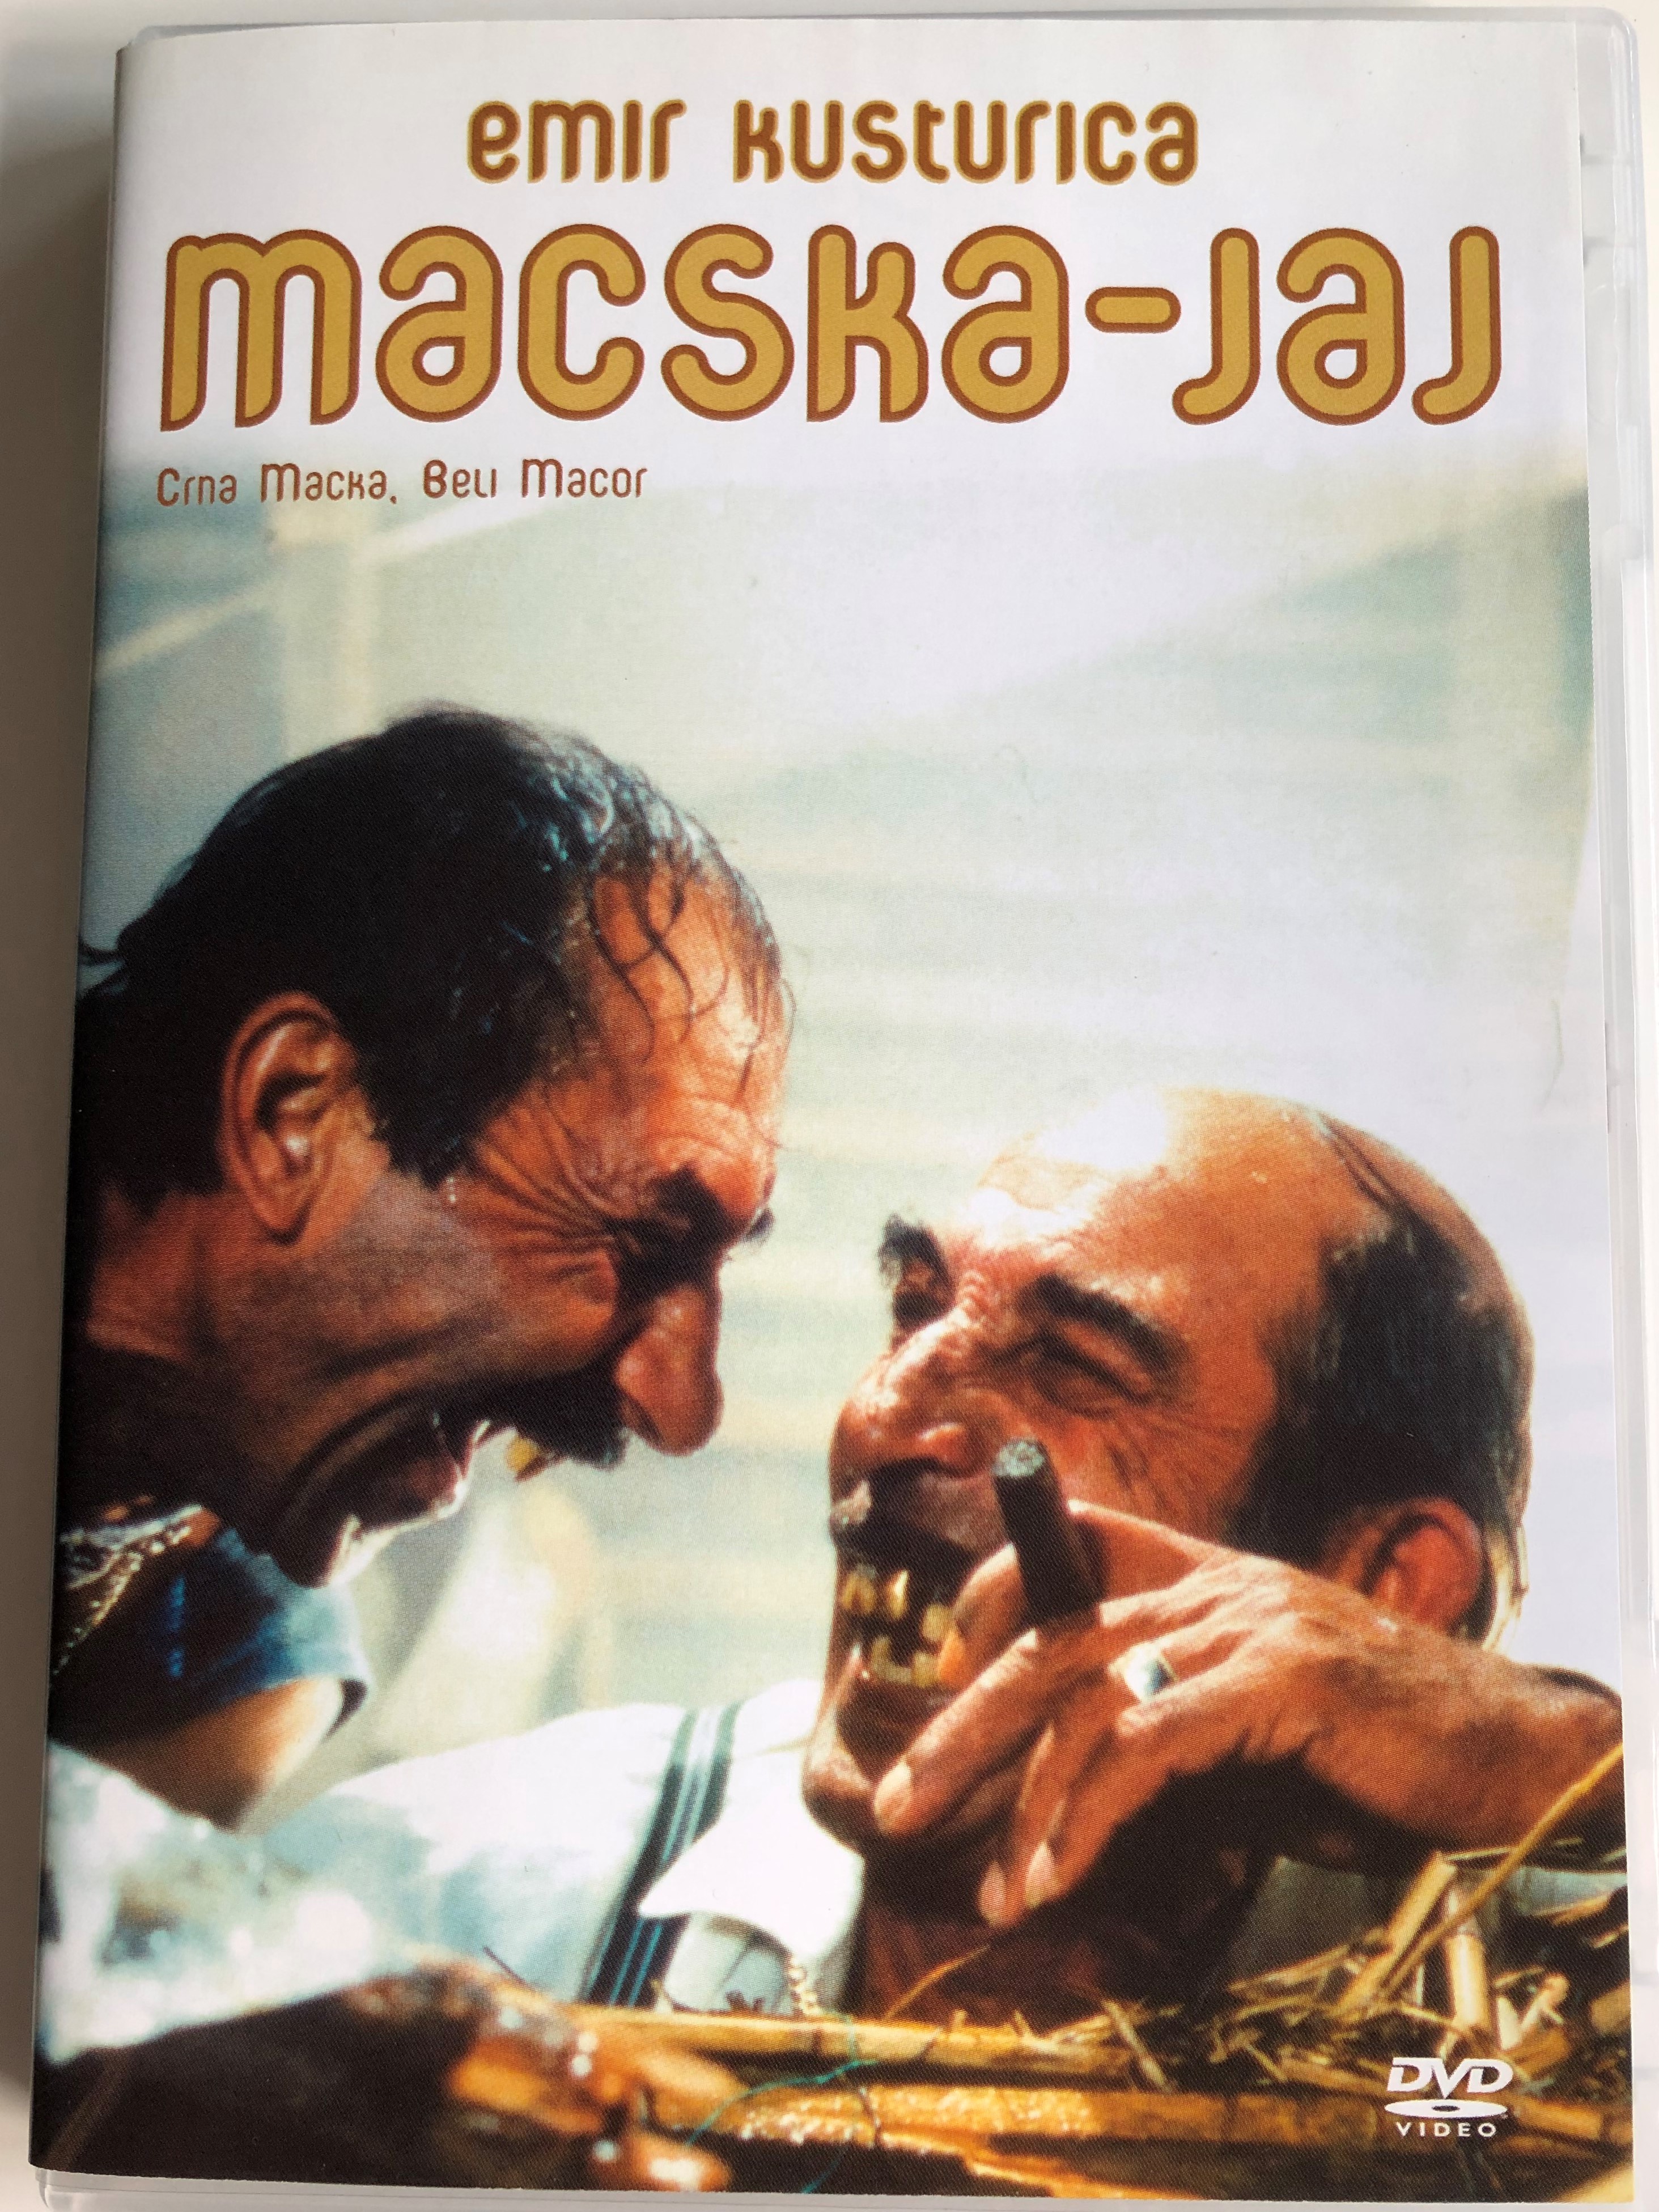 crna-ma-ka-beli-ma-or-dvd-1998-macska-jaj-black-cat-white-cat-directed-by-emir-kusturica-starring-bajram-severd-an-sr-an-todorovi-branka-kati-florijan-ajdini-ljubica-ad-ovi-zabit-memedov-1-.jpg